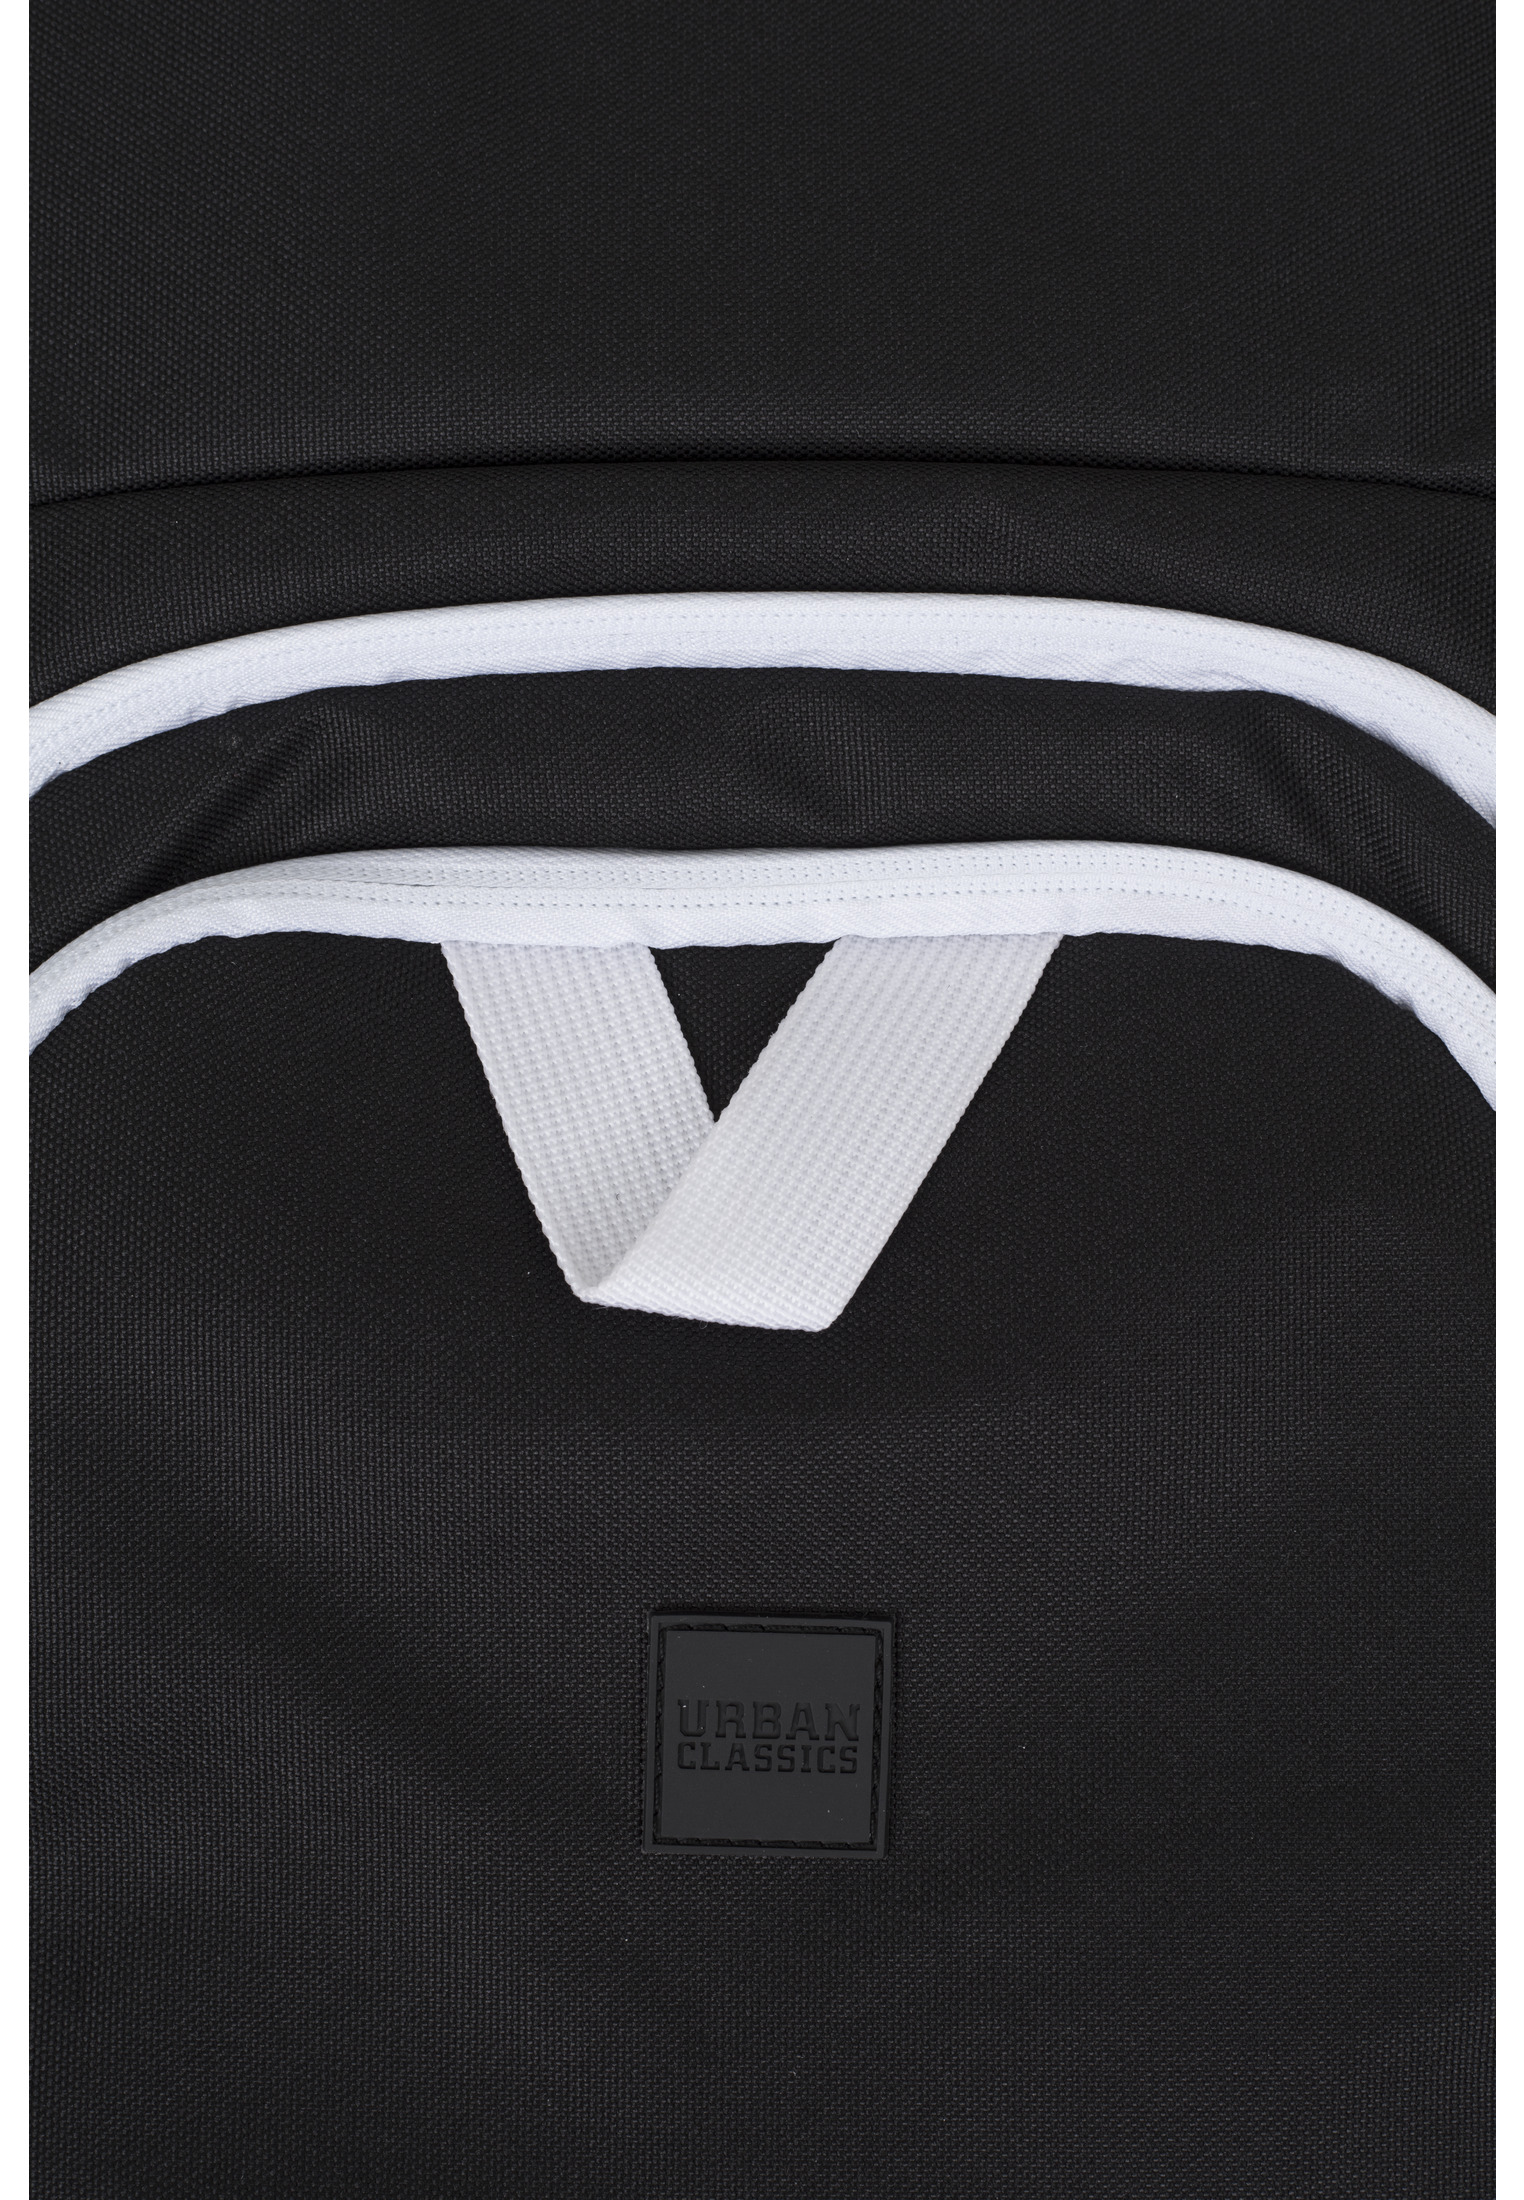 Taschen Ball Gym Bag in Farbe black/black/white